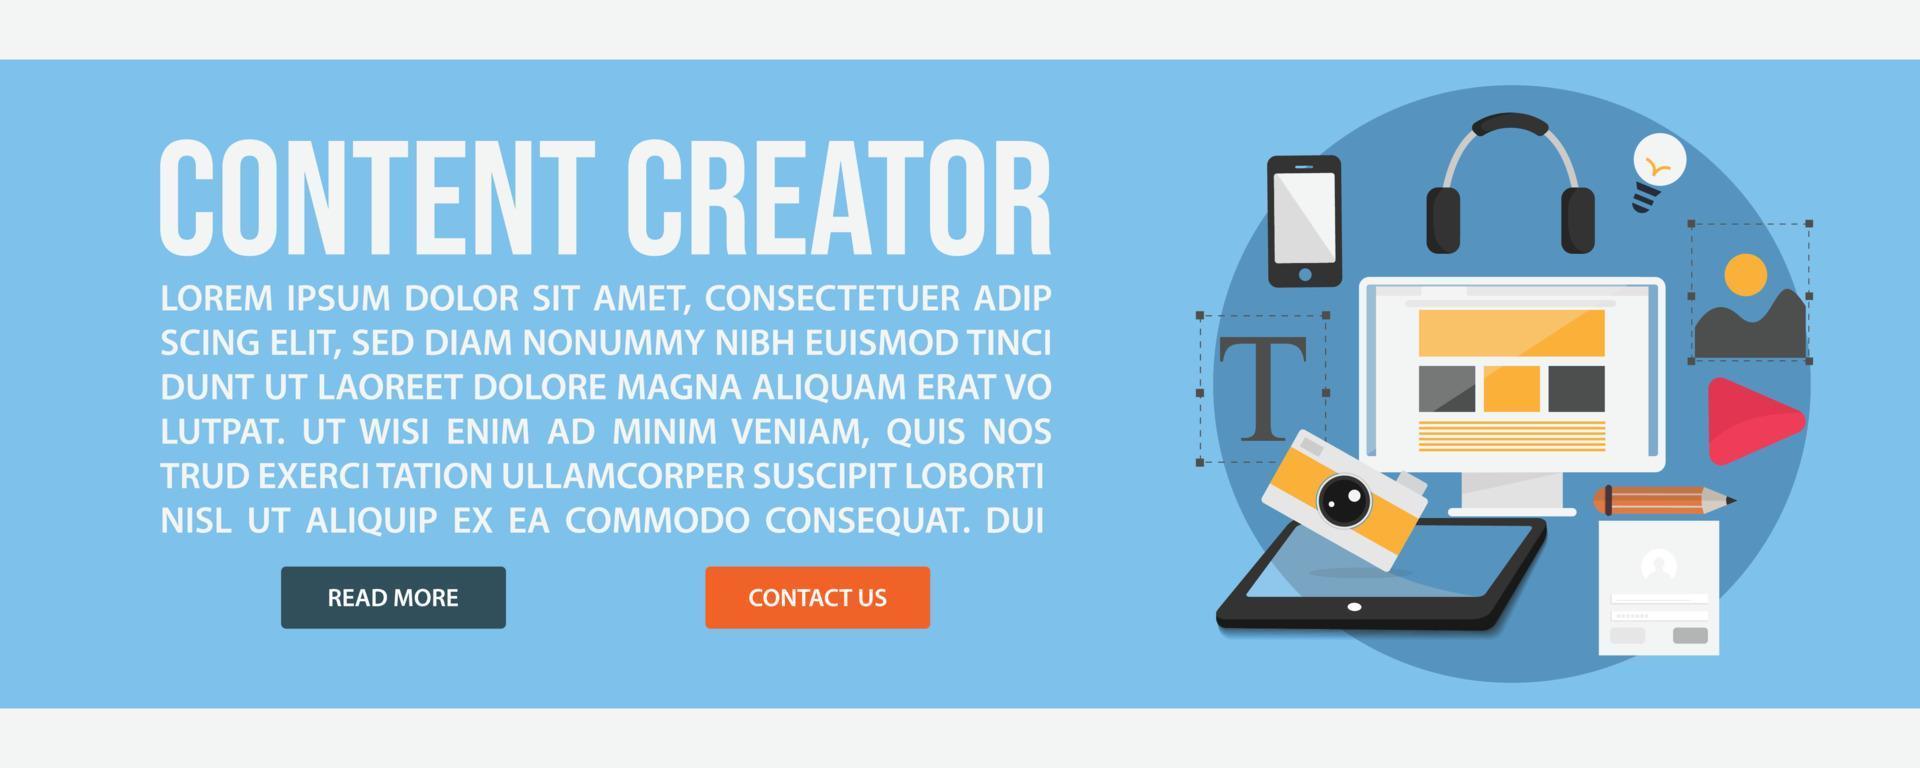 Content creator web banner template vector